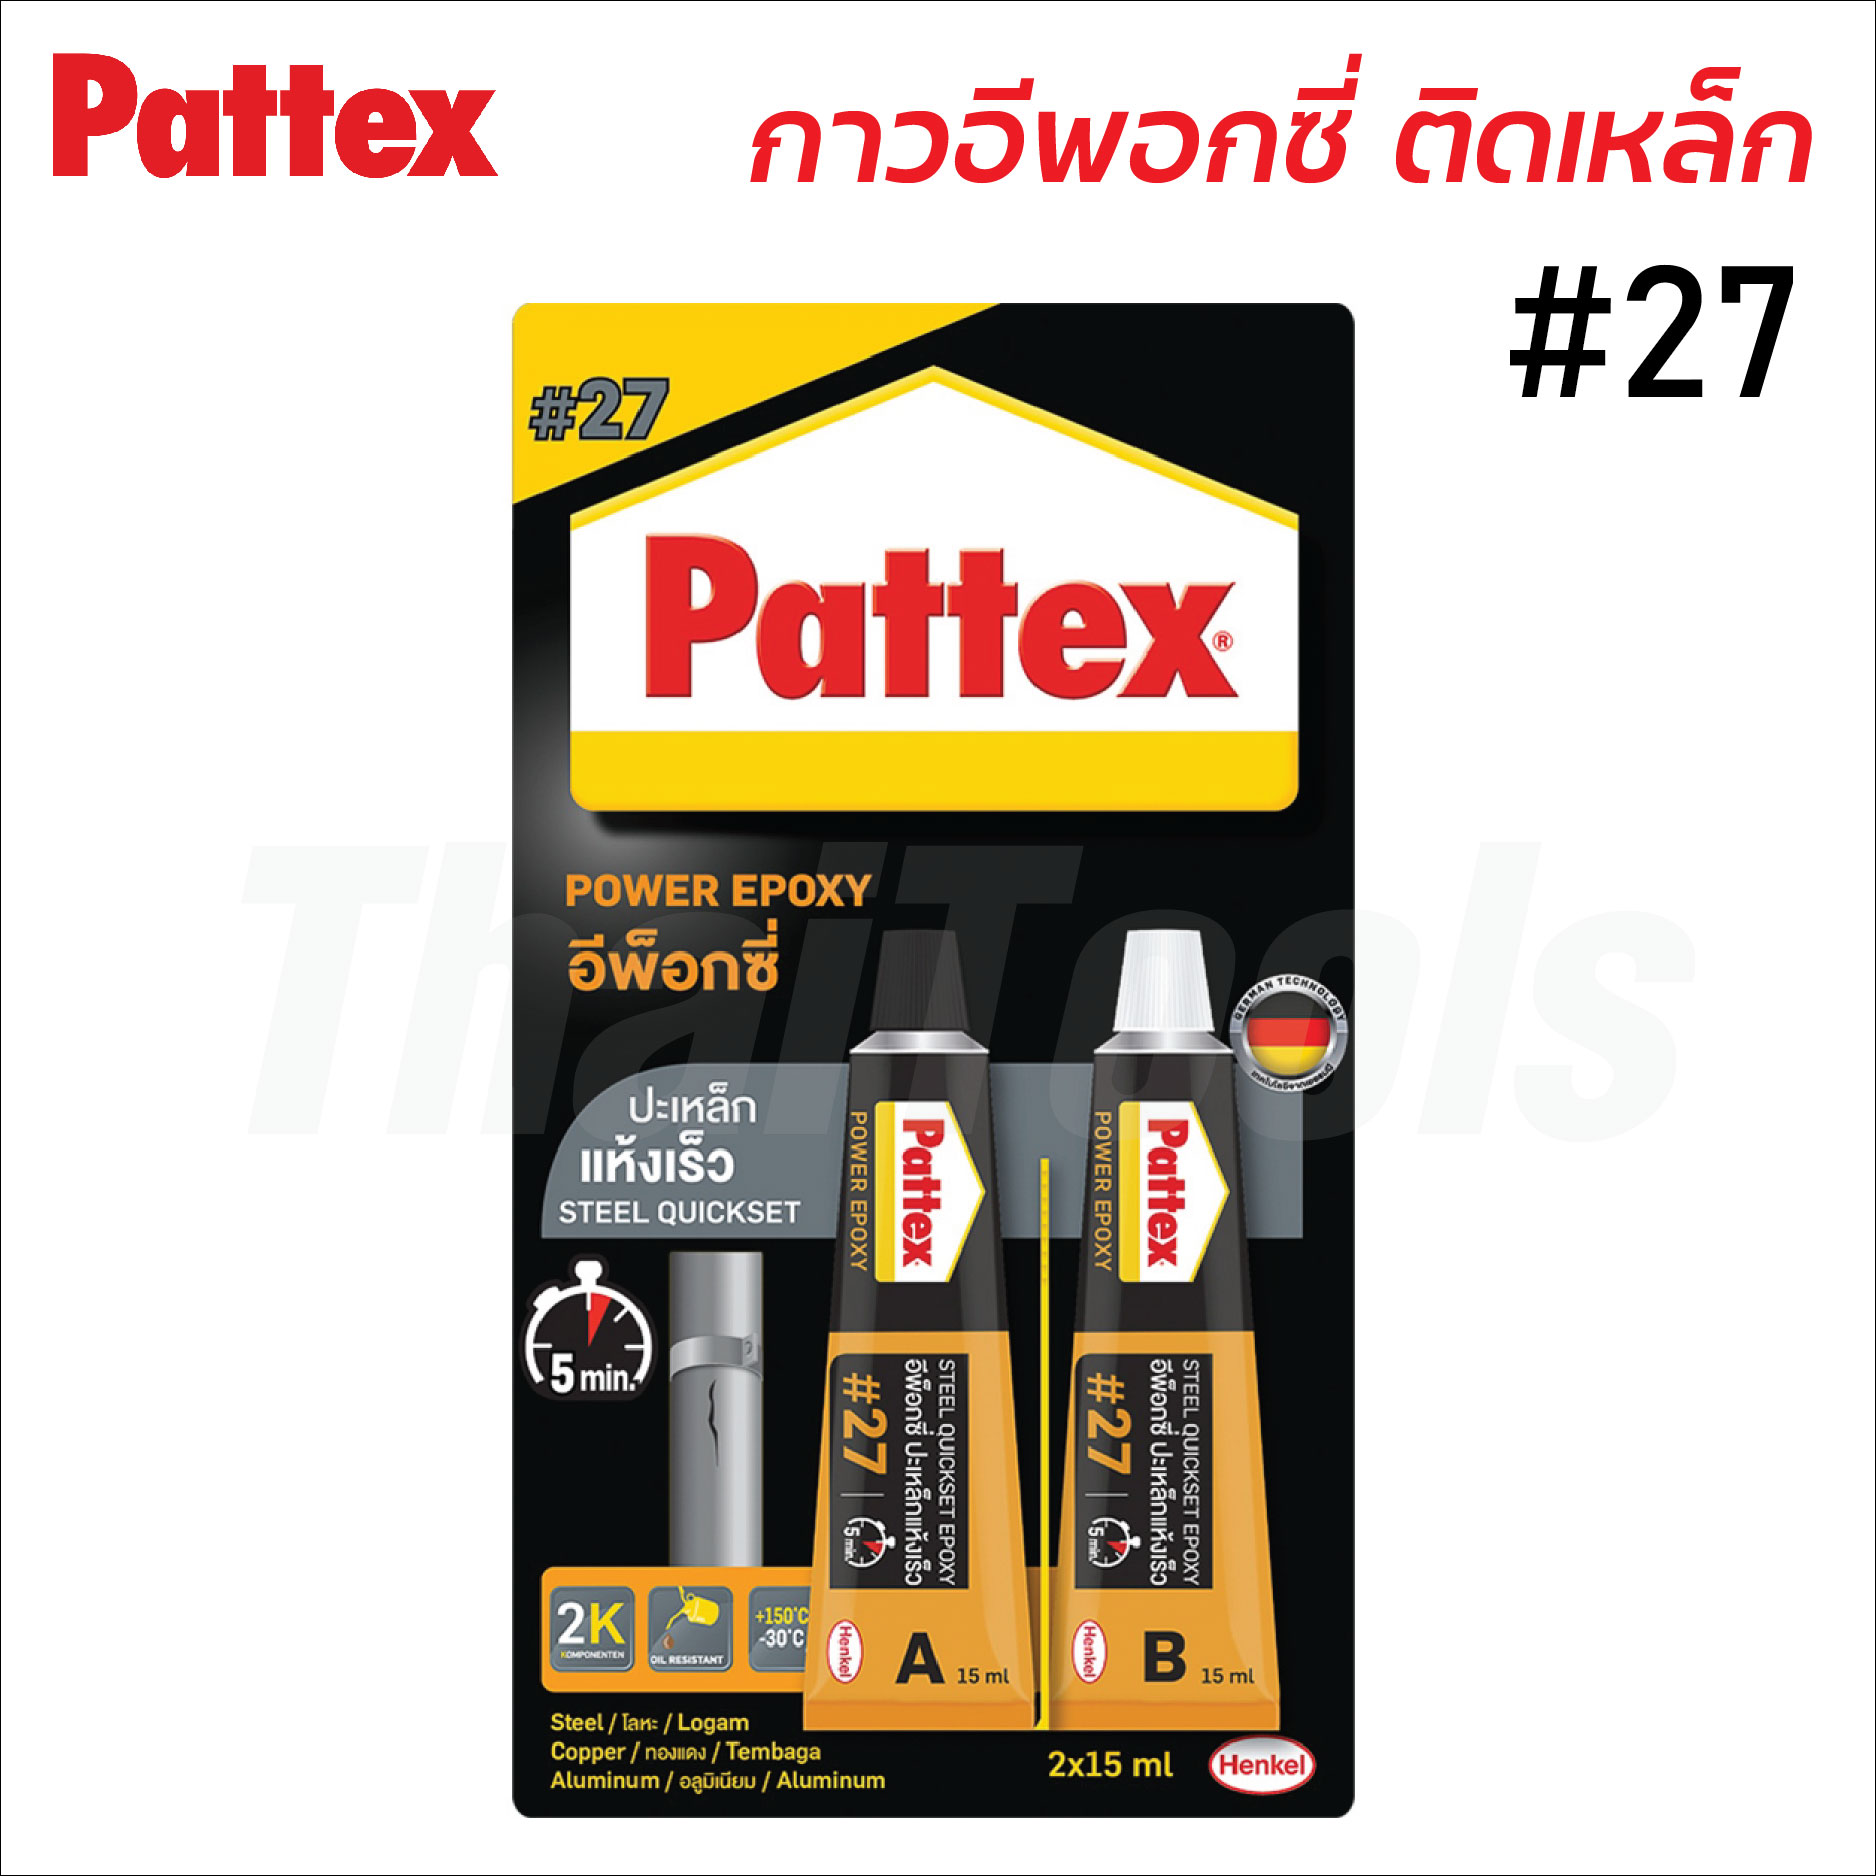 Pattex Power Epoxy Metal Repair Tube